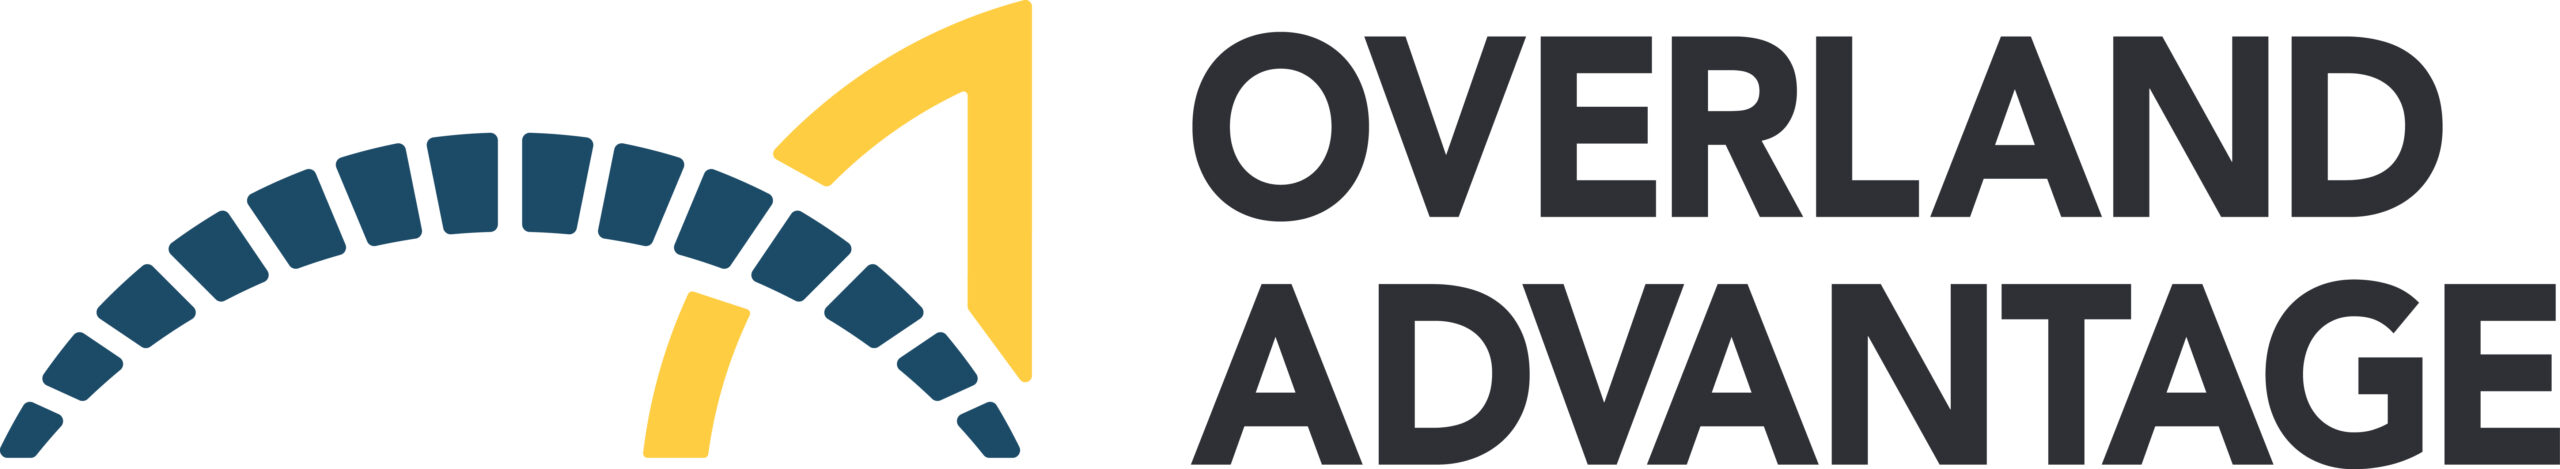 Overland-Advantage-logo